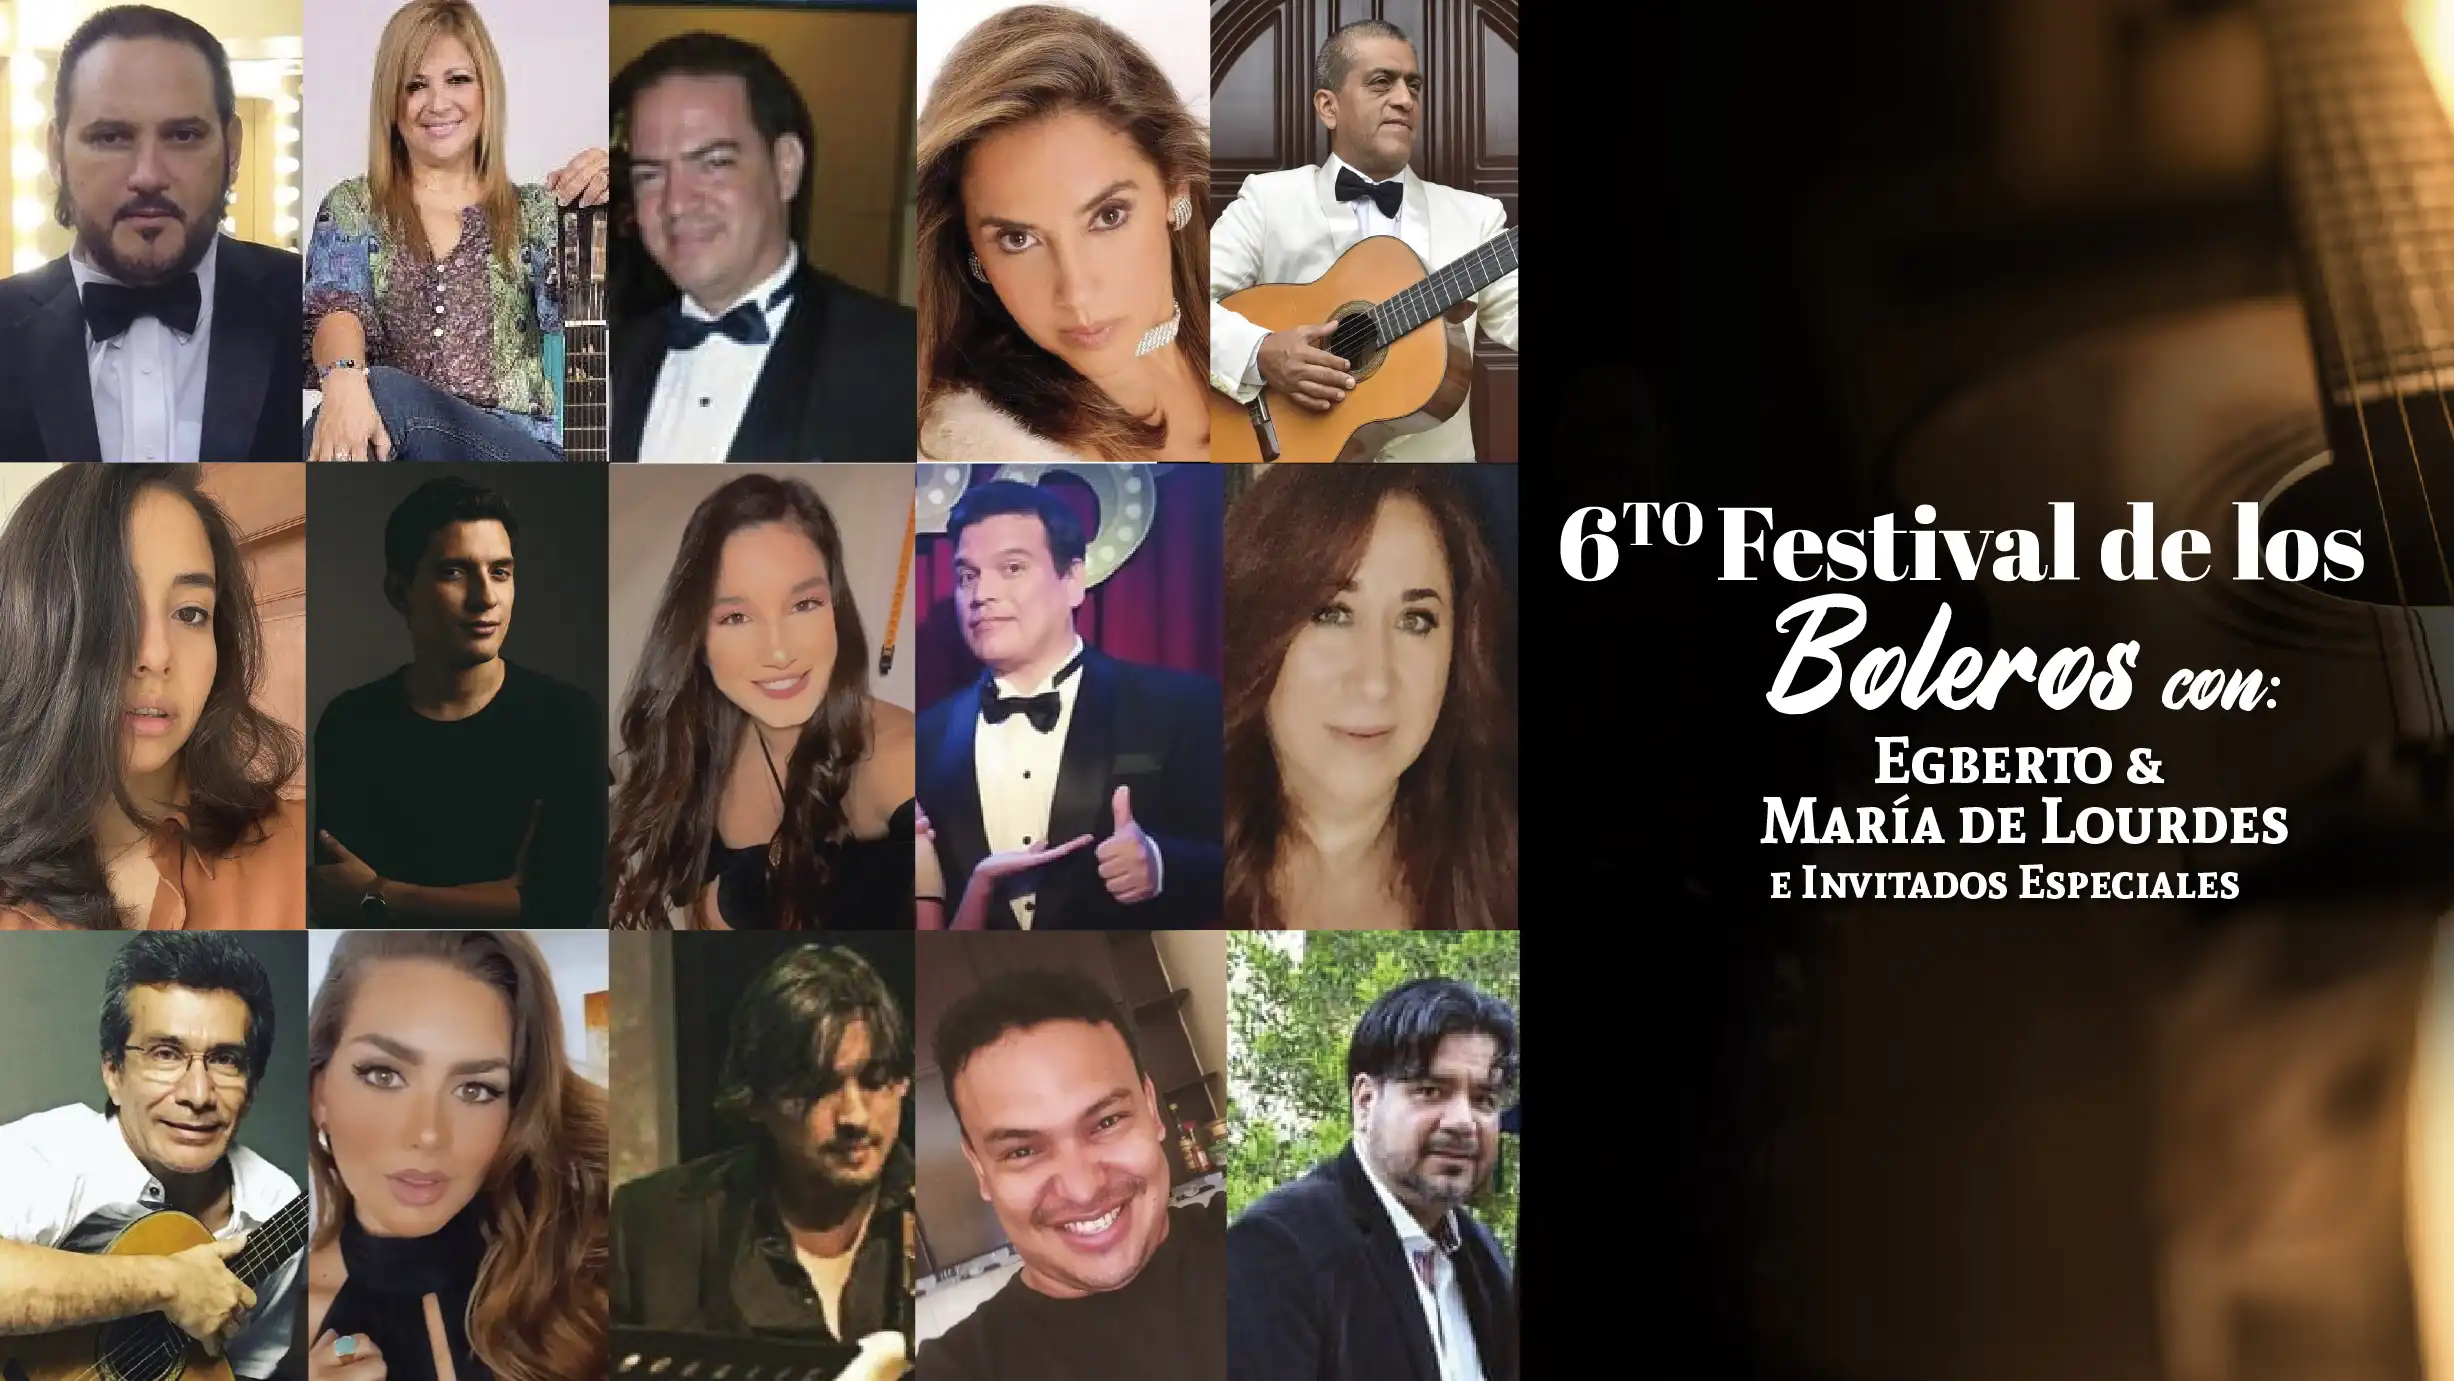 6to-festival-boleros-egberto-amp-maria-lourdes-invitados-especiales